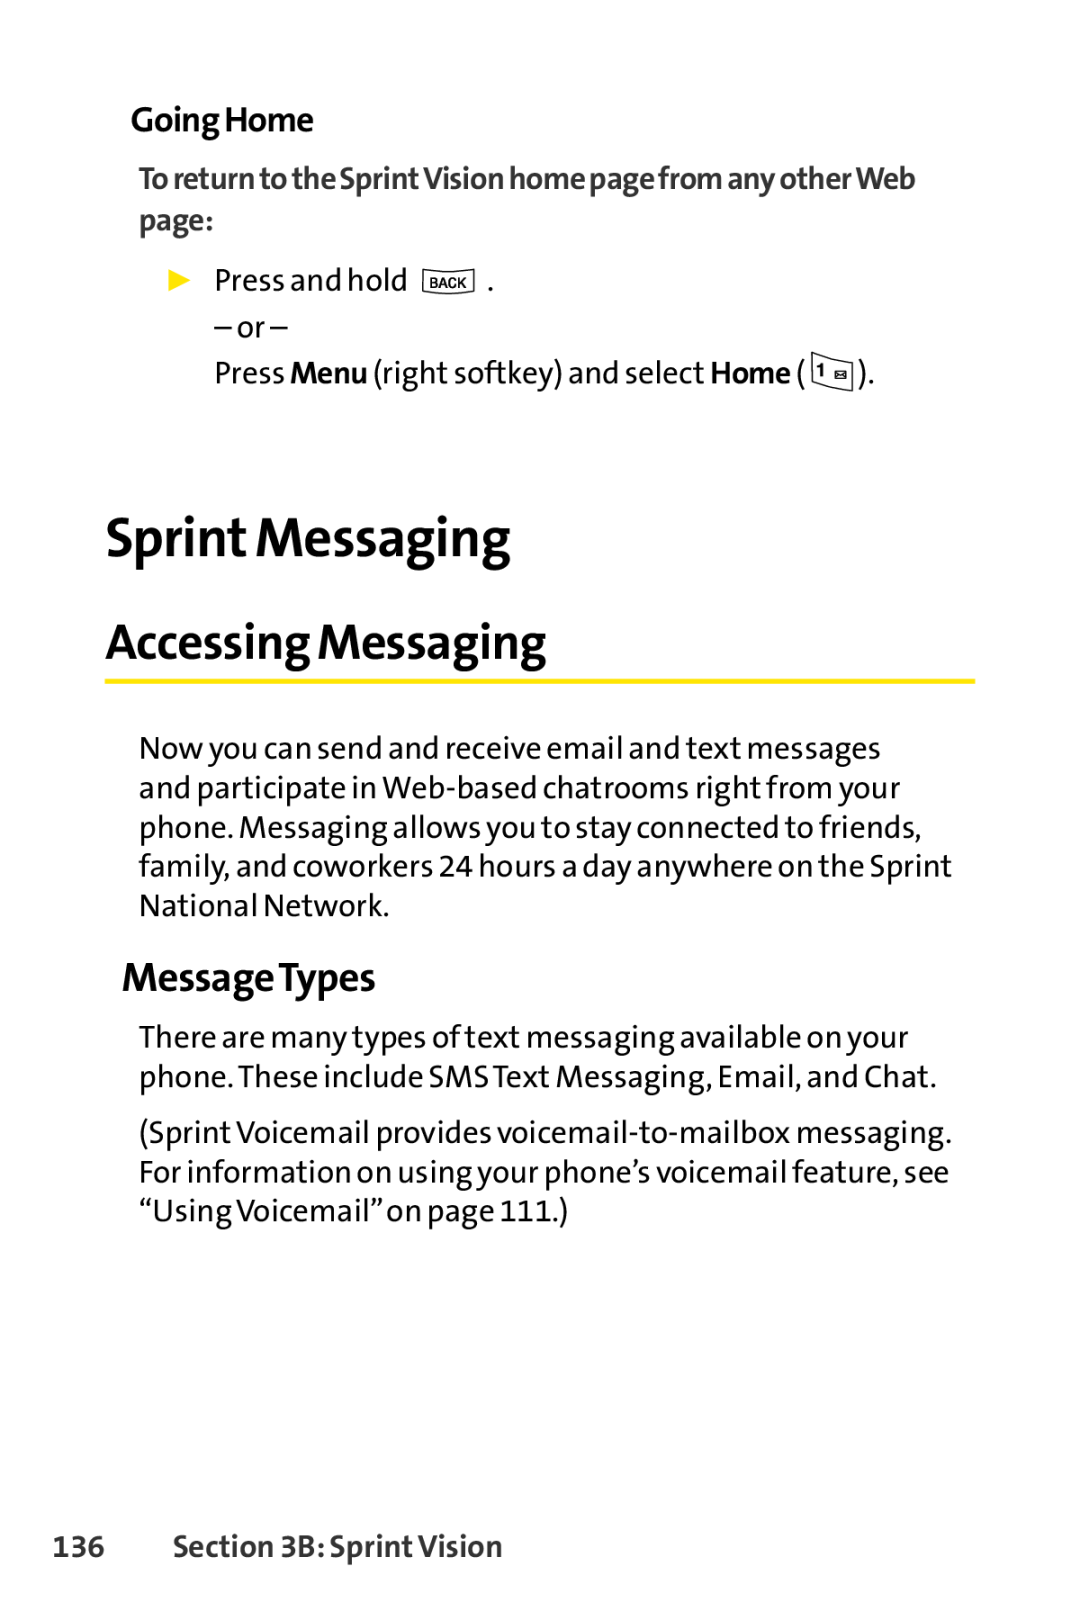 Sprint Nextel LX160 manual Sprint Messaging, Accessing Messaging, MessageTypes, GoingHome, B Sprint Vision 